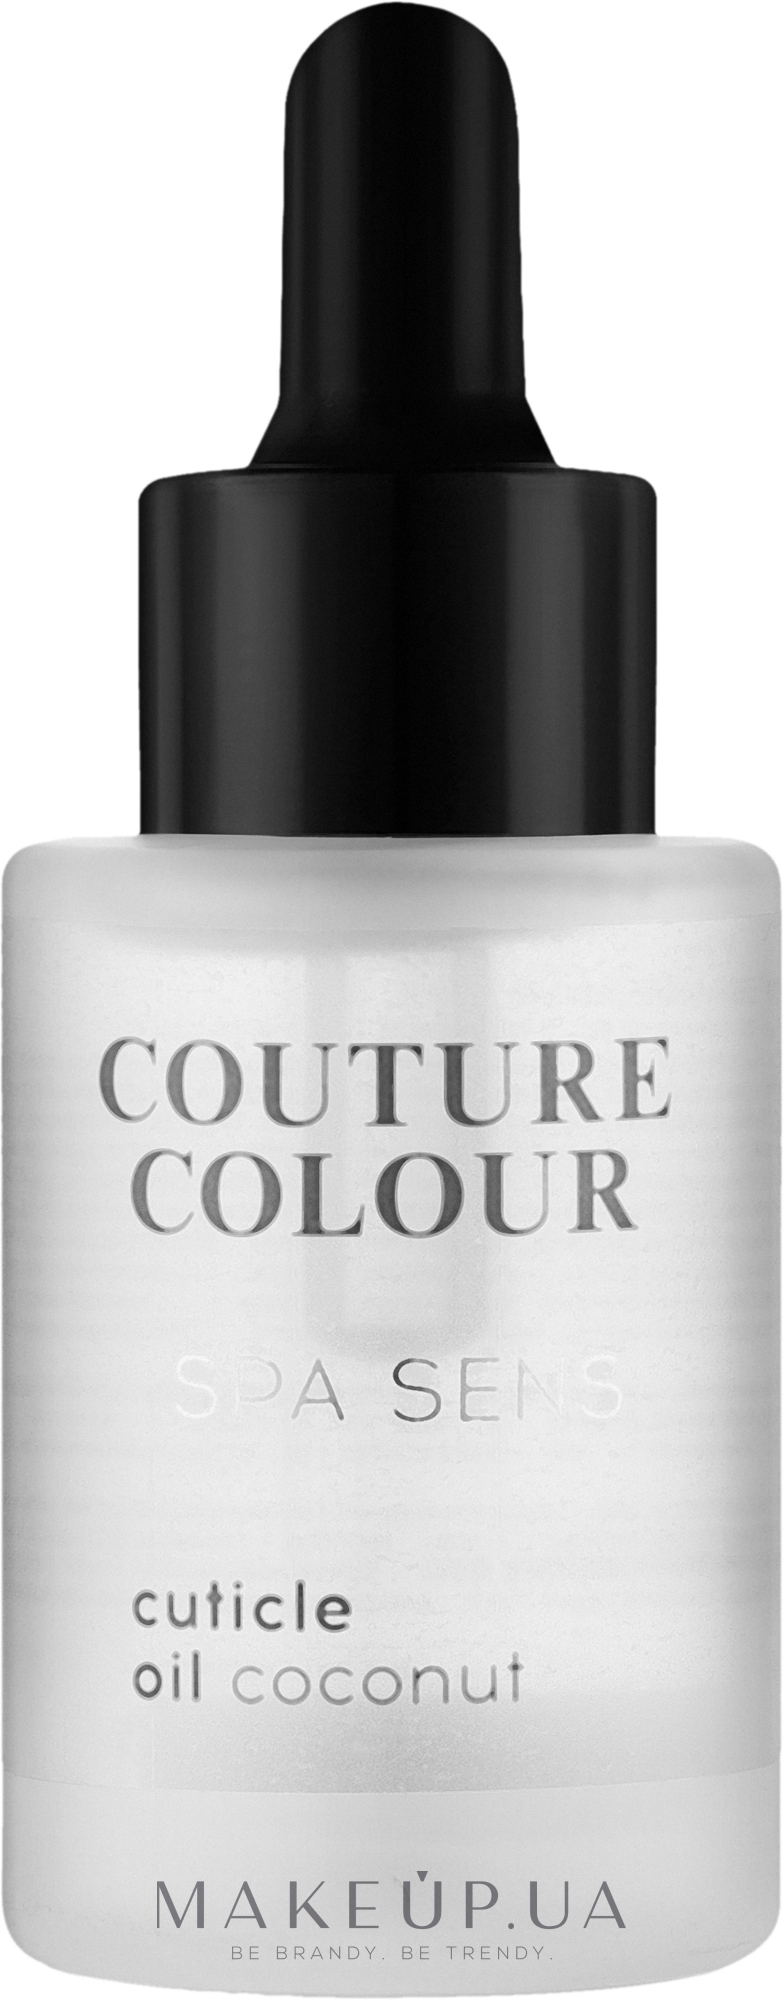 Засіб для догляду за нігтями і кутикулою "Кокос" - Couture Colour Spa Sens Cuticle Oil Coconut — фото 30ml